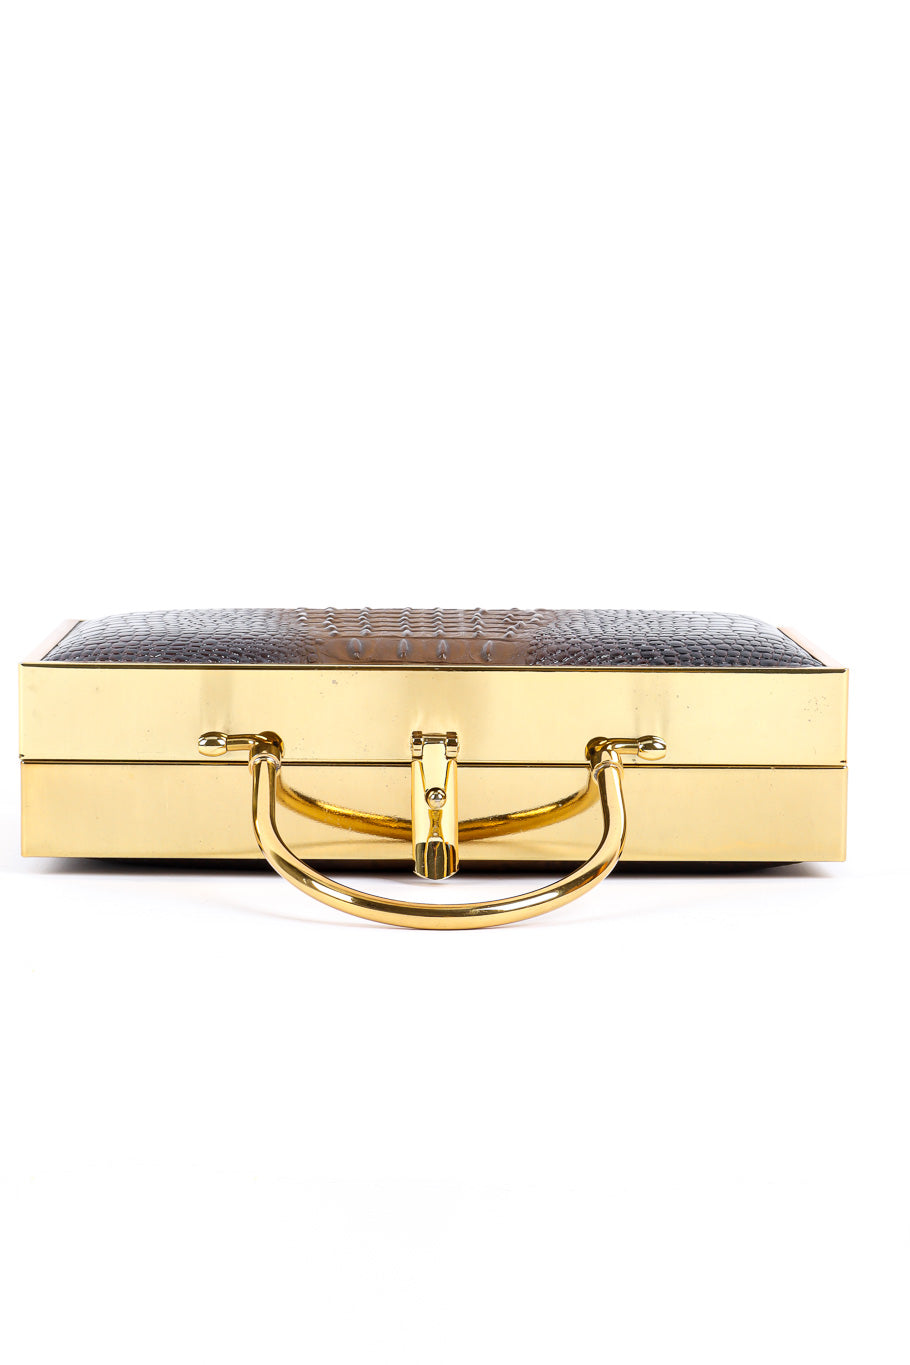 Lou Taylor gold frame box purse flat-lay photo @recessla